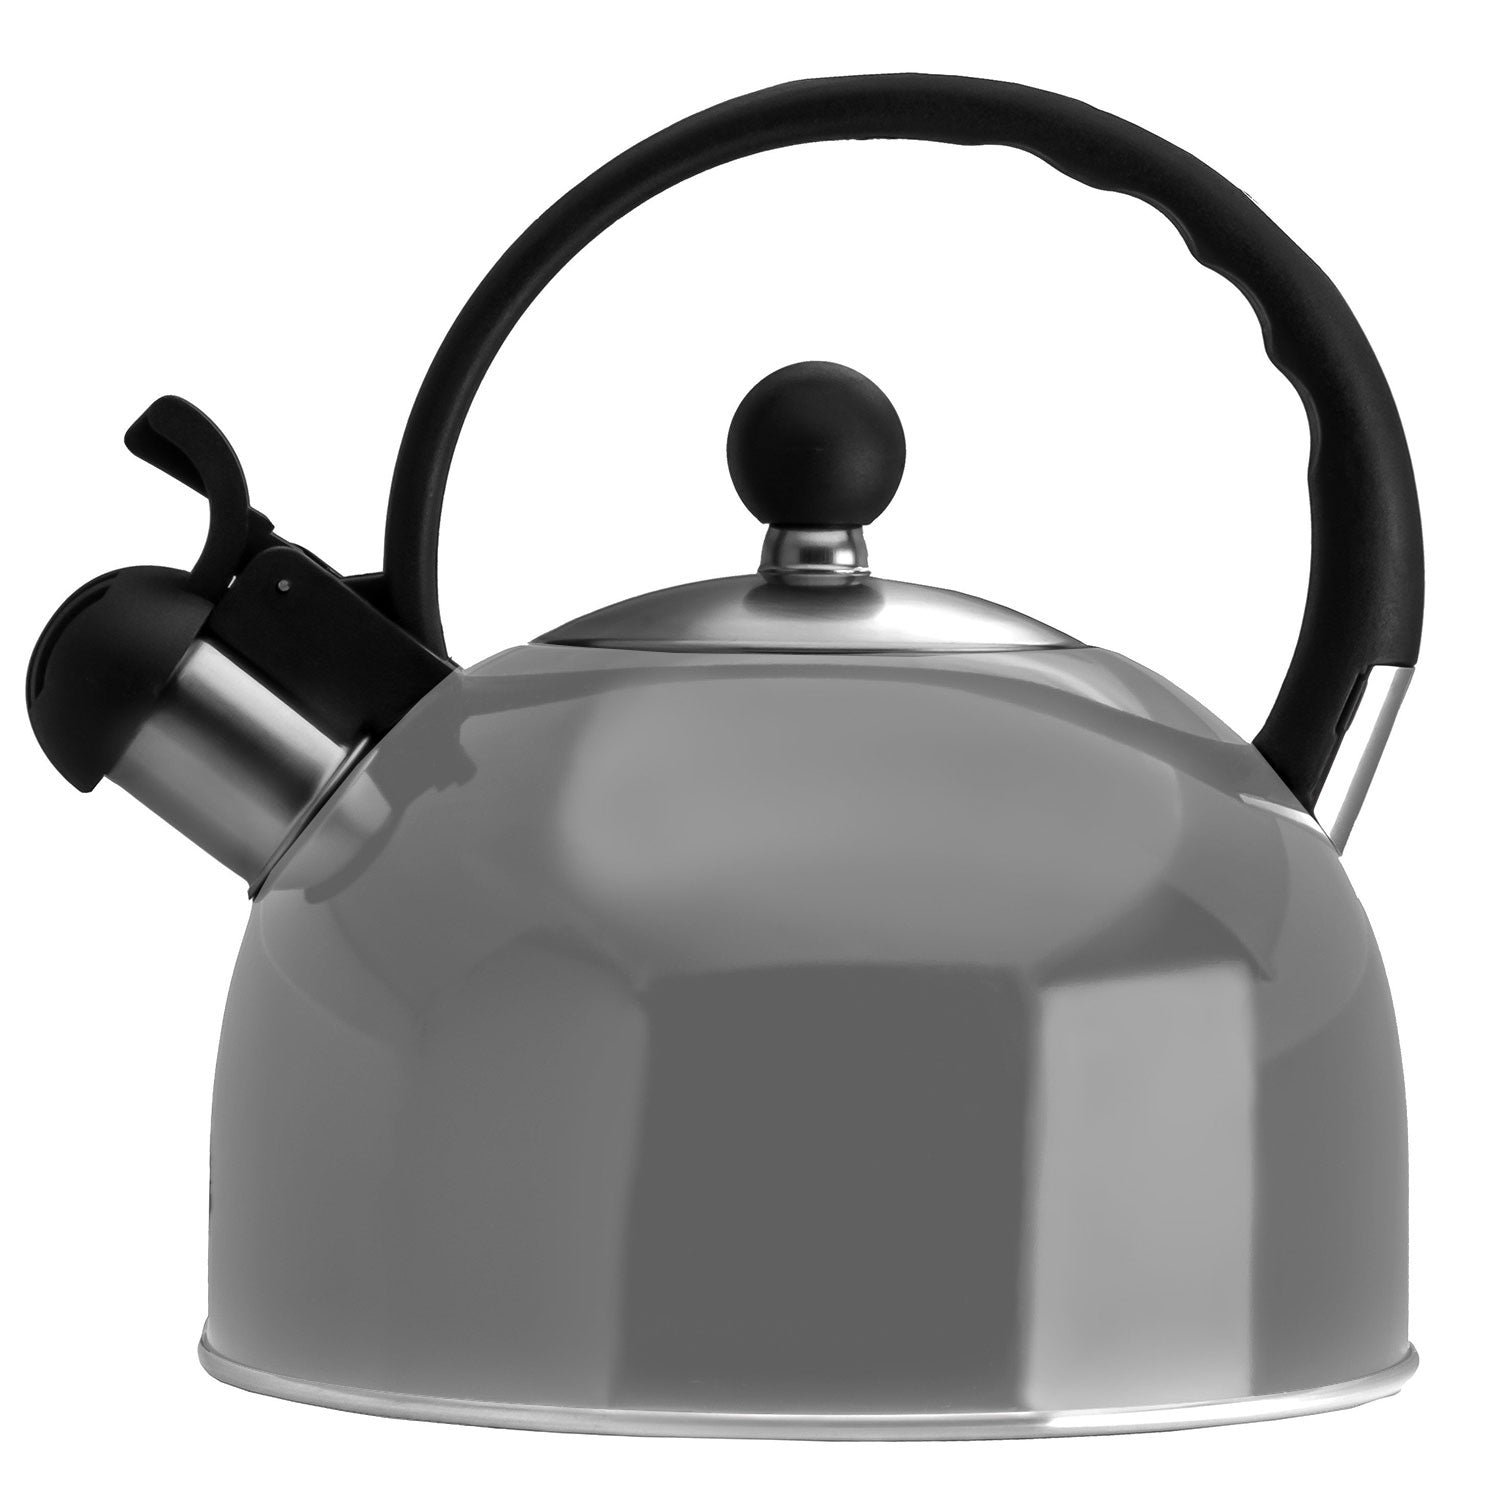 PREMIUS Stainless Steel Whistling Tea Kettle, Gray, 2.5 Liters